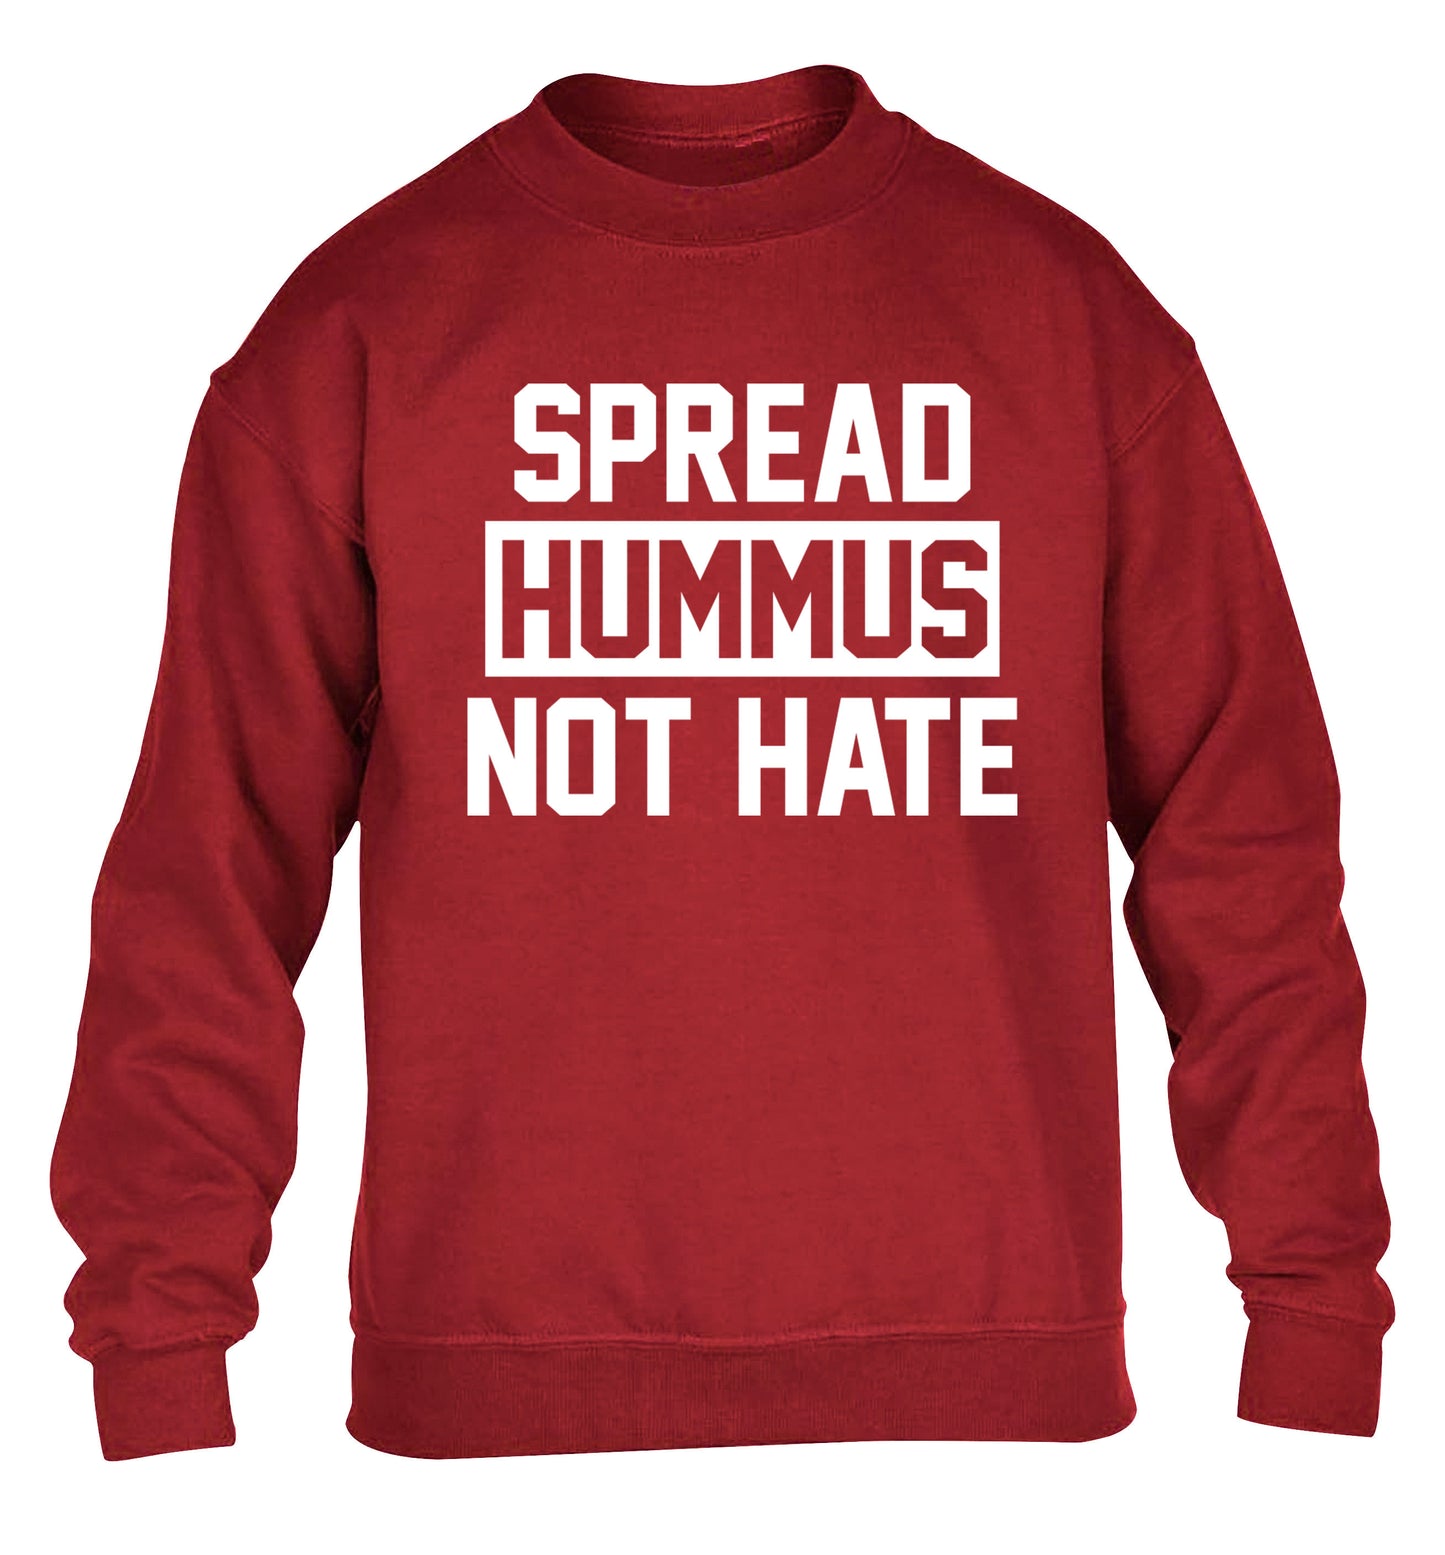 Spread hummus not hate children's grey sweater 12-14 Years